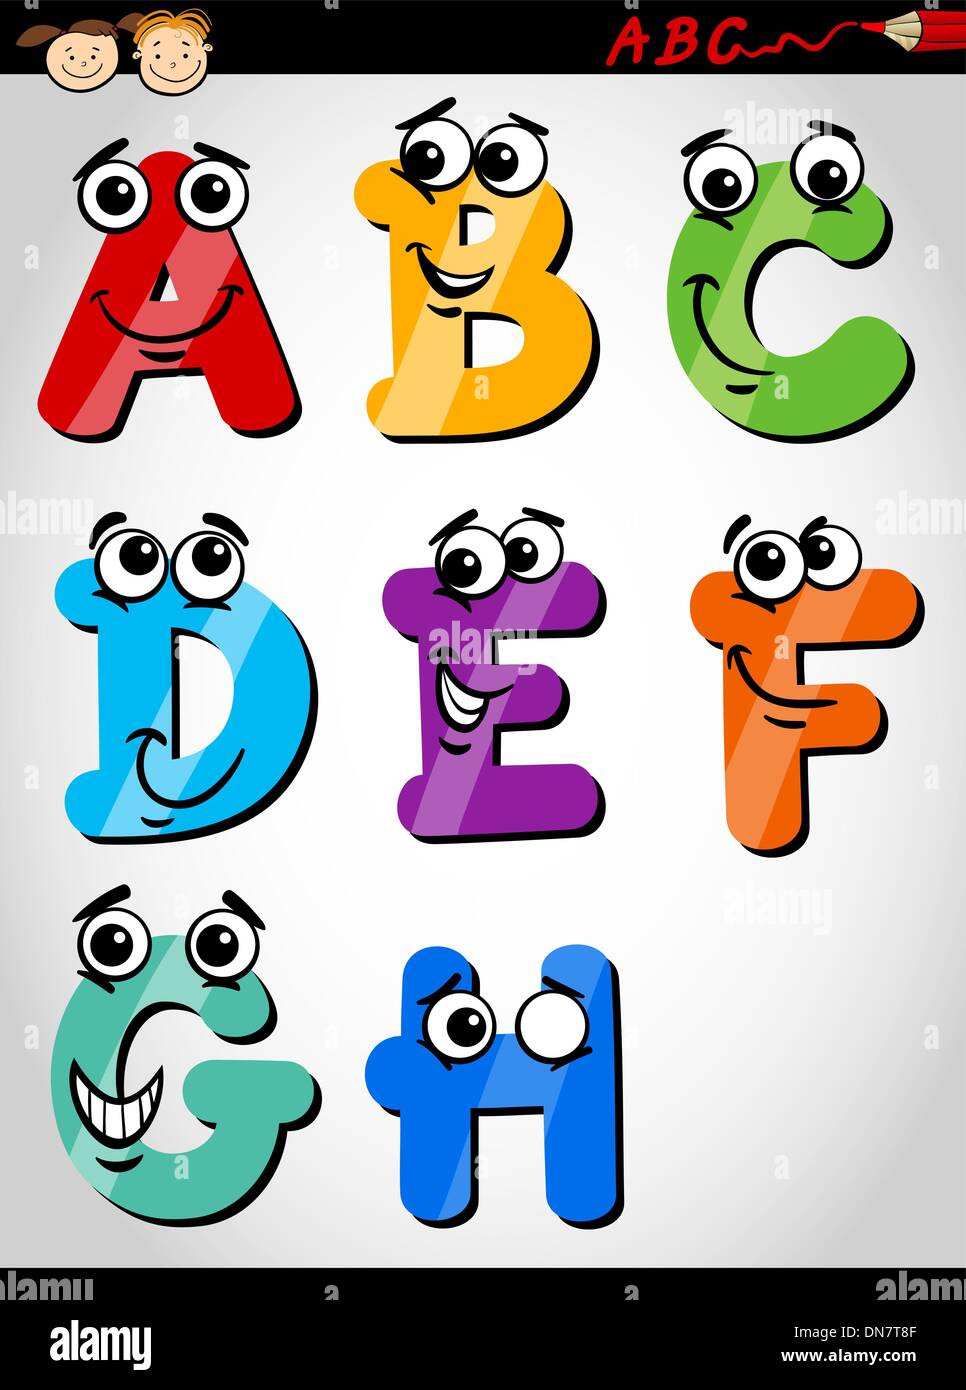 funny letters alphabet cartoon illustration Stock Vector